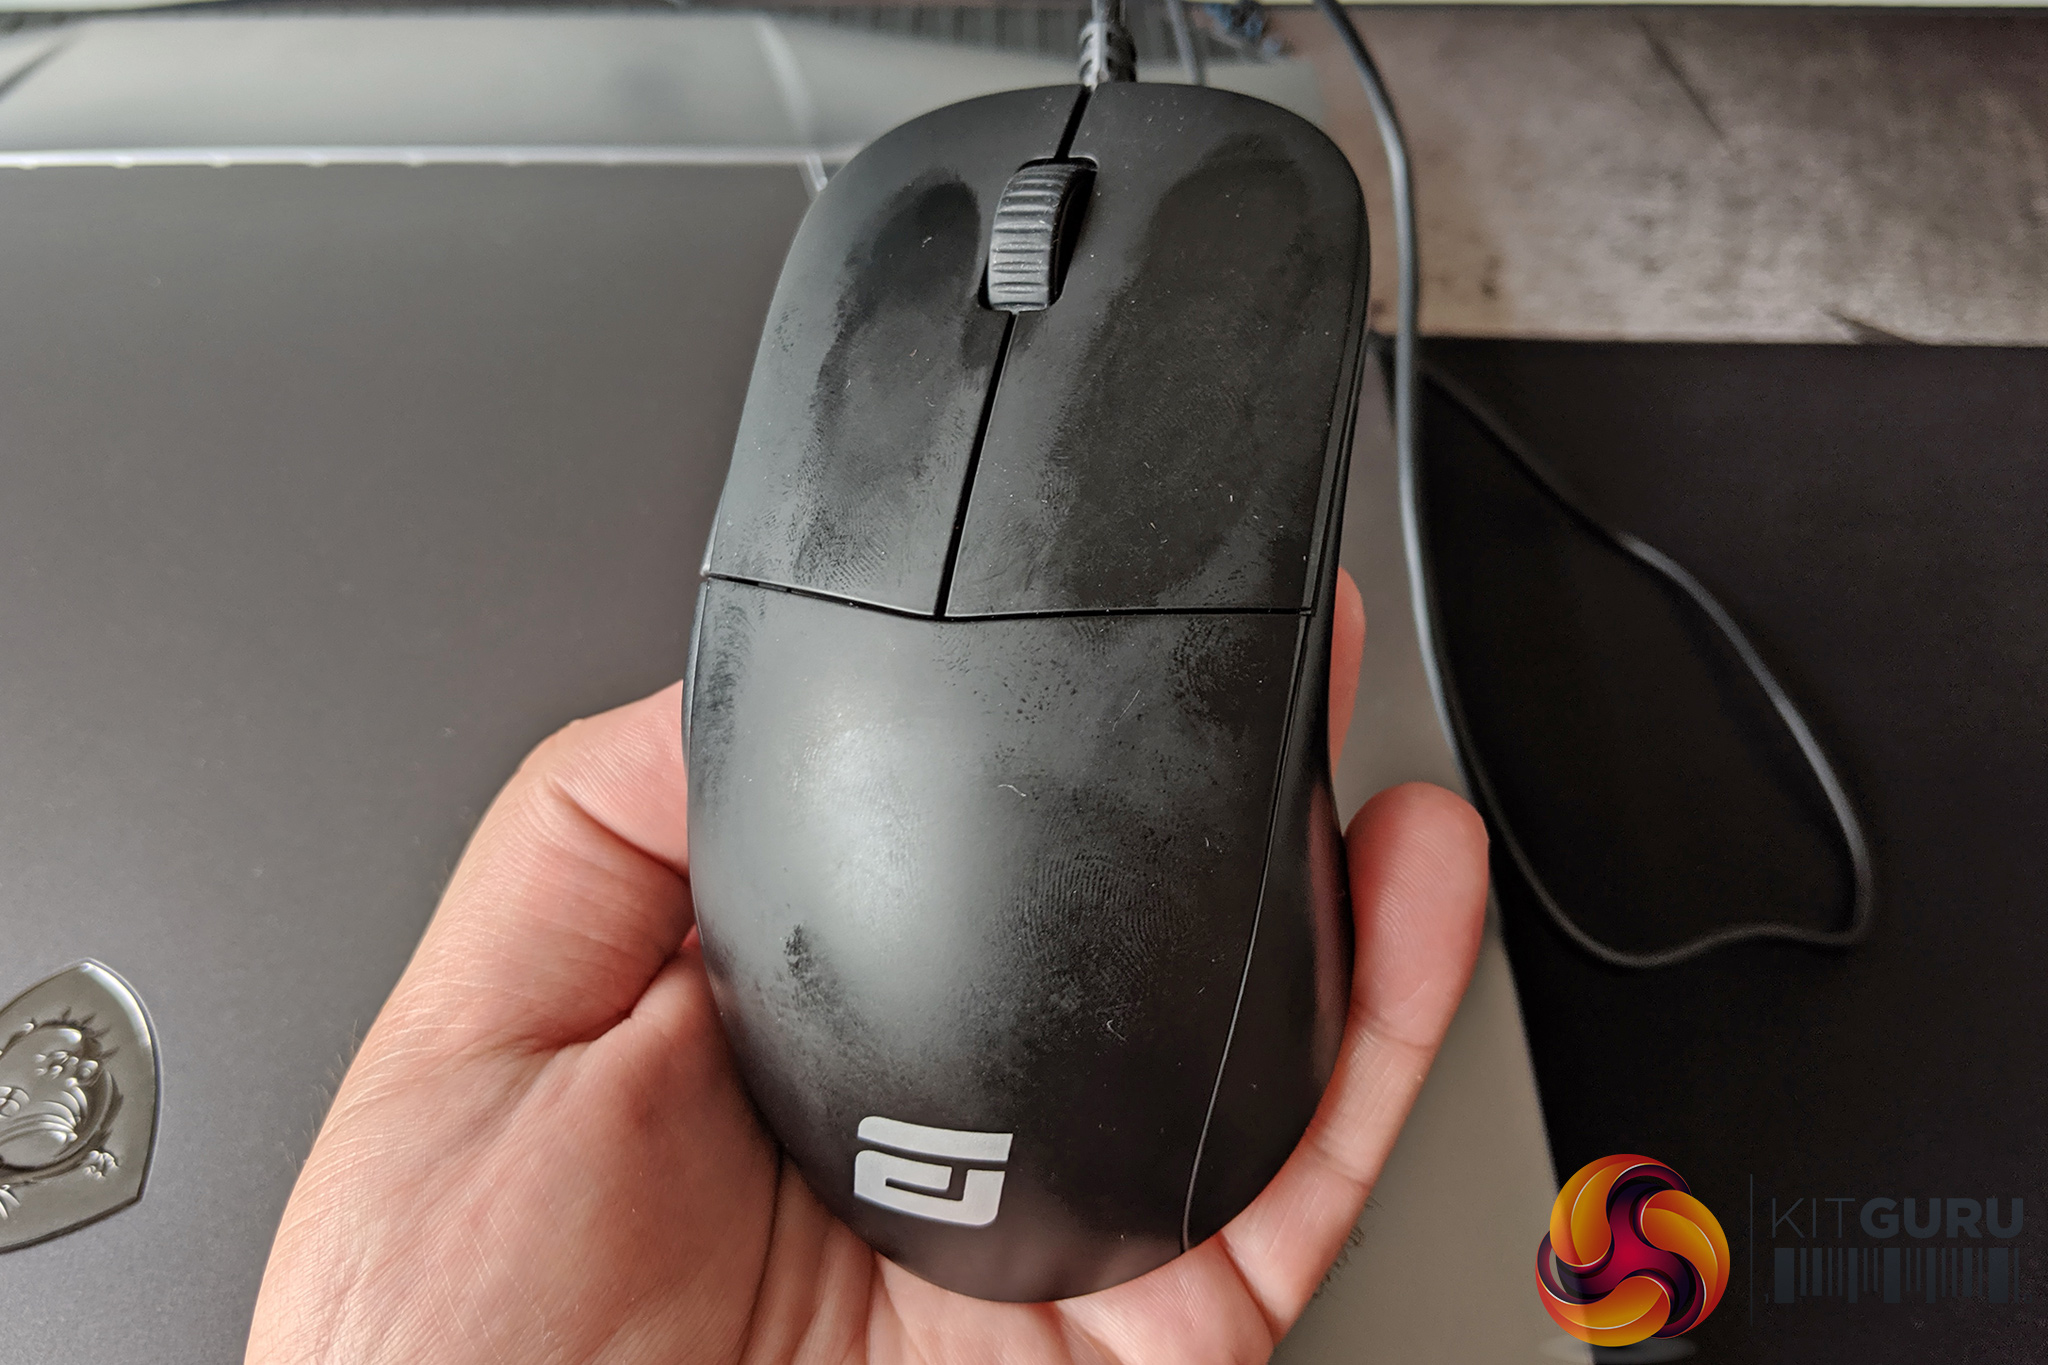 Endgame Gear Xm1 Mouse Review Kitguru Part 3